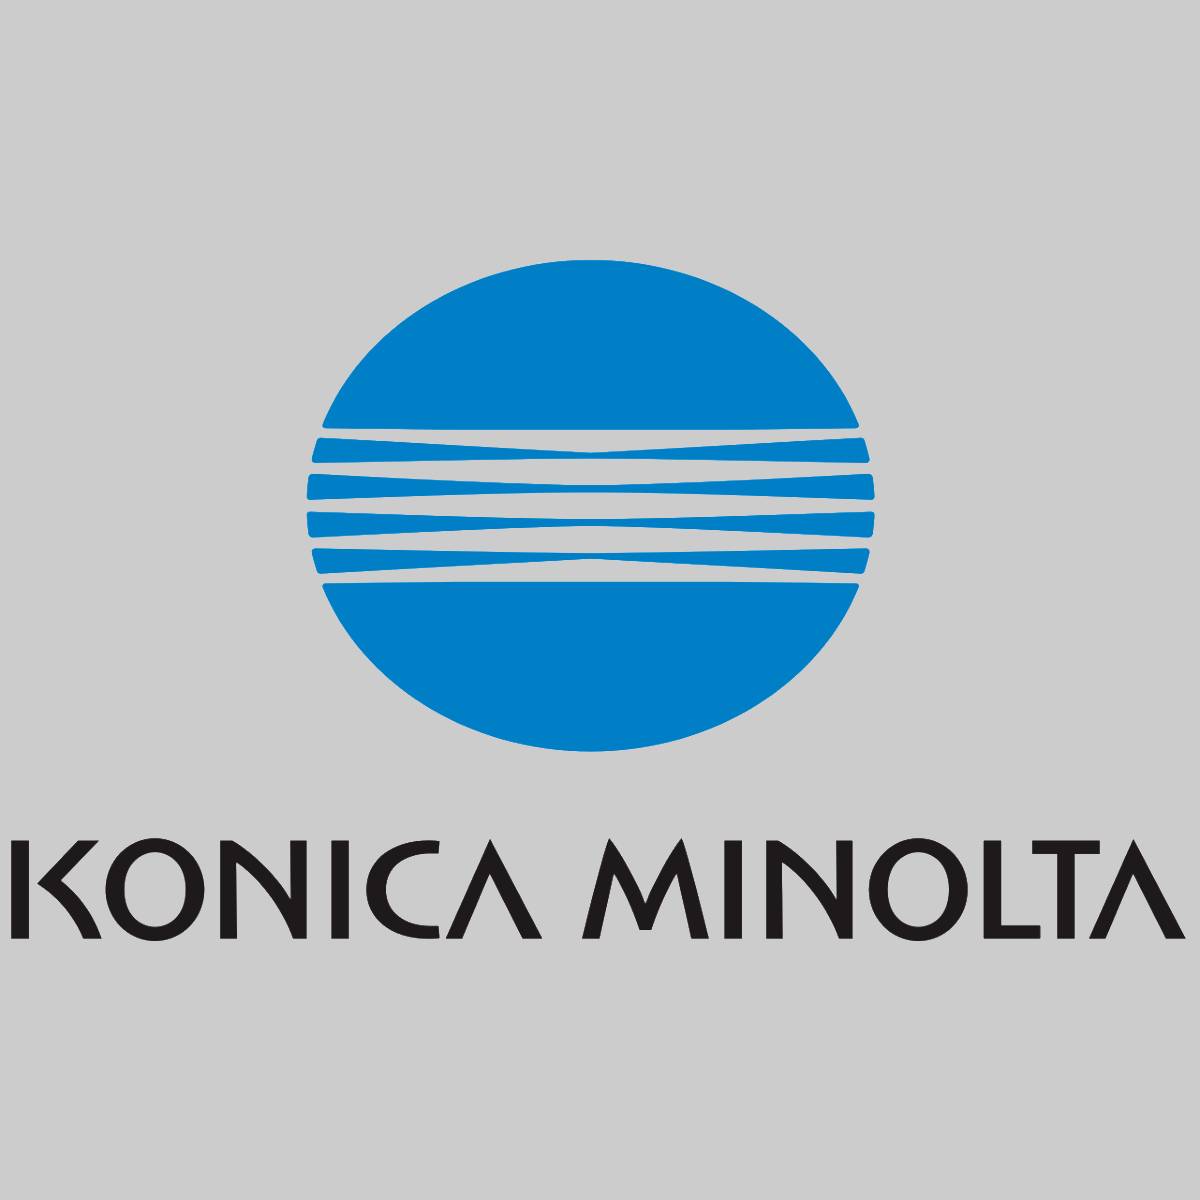 "Original Konica Minolta TN616M-L Magenta Toner A1U9252 für Bizhub Pro C6000 NEU